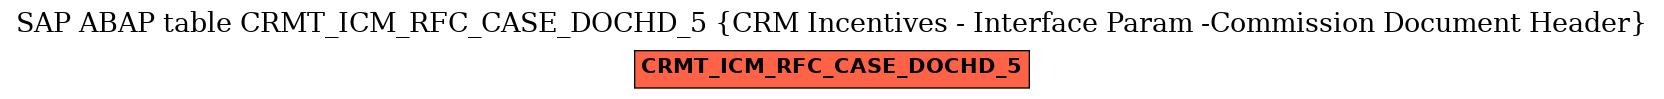 E-R Diagram for table CRMT_ICM_RFC_CASE_DOCHD_5 (CRM Incentives - Interface Param -Commission Document Header)